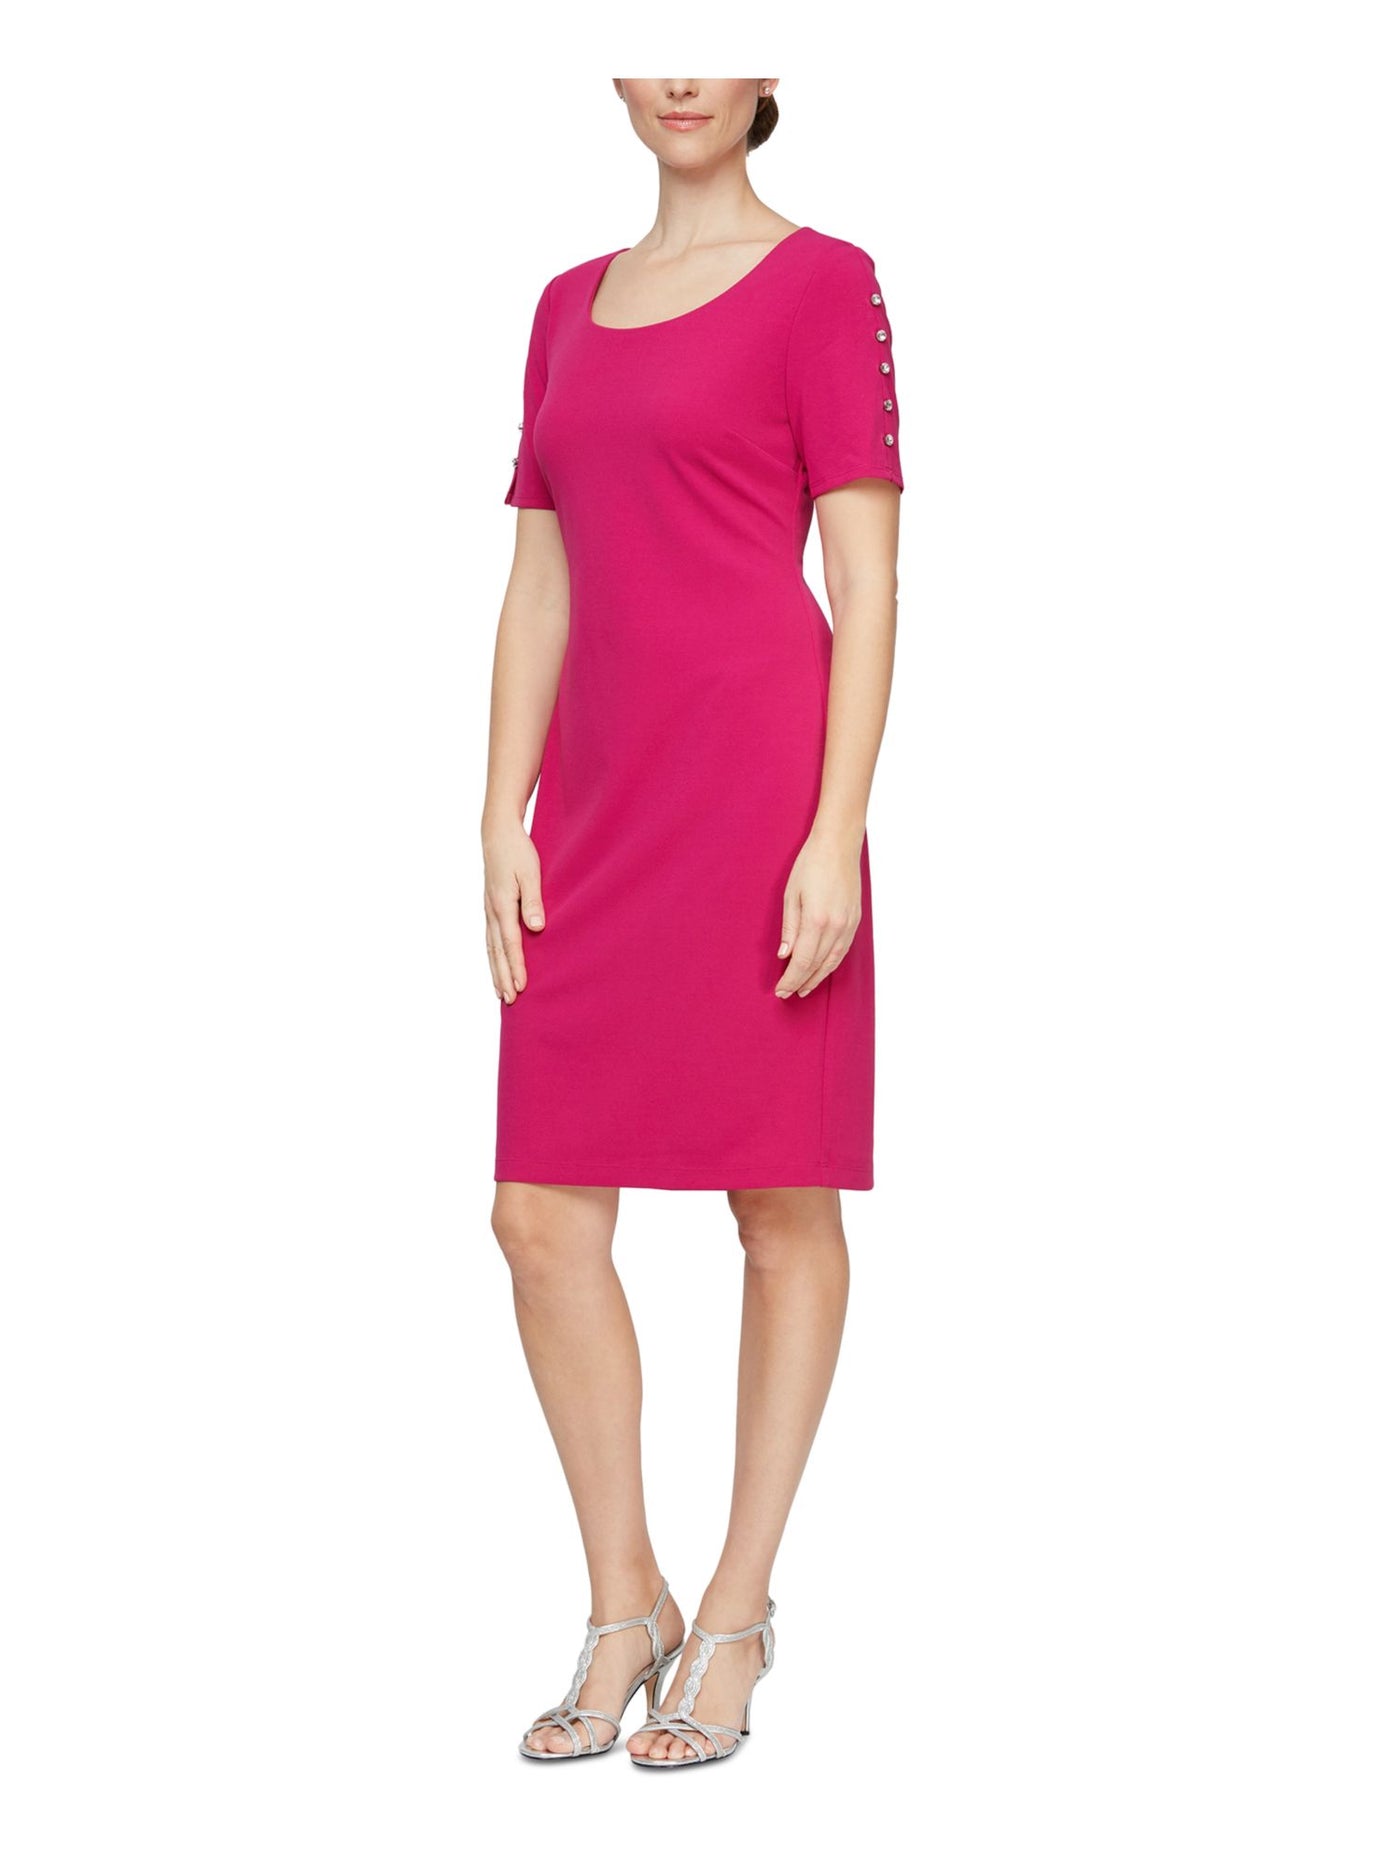 SLNY Womens Pink Embellished Zippered Unlined Darted Short Sleeve Scoop Neck Knee Length Wear To Work Sheath Dress 10